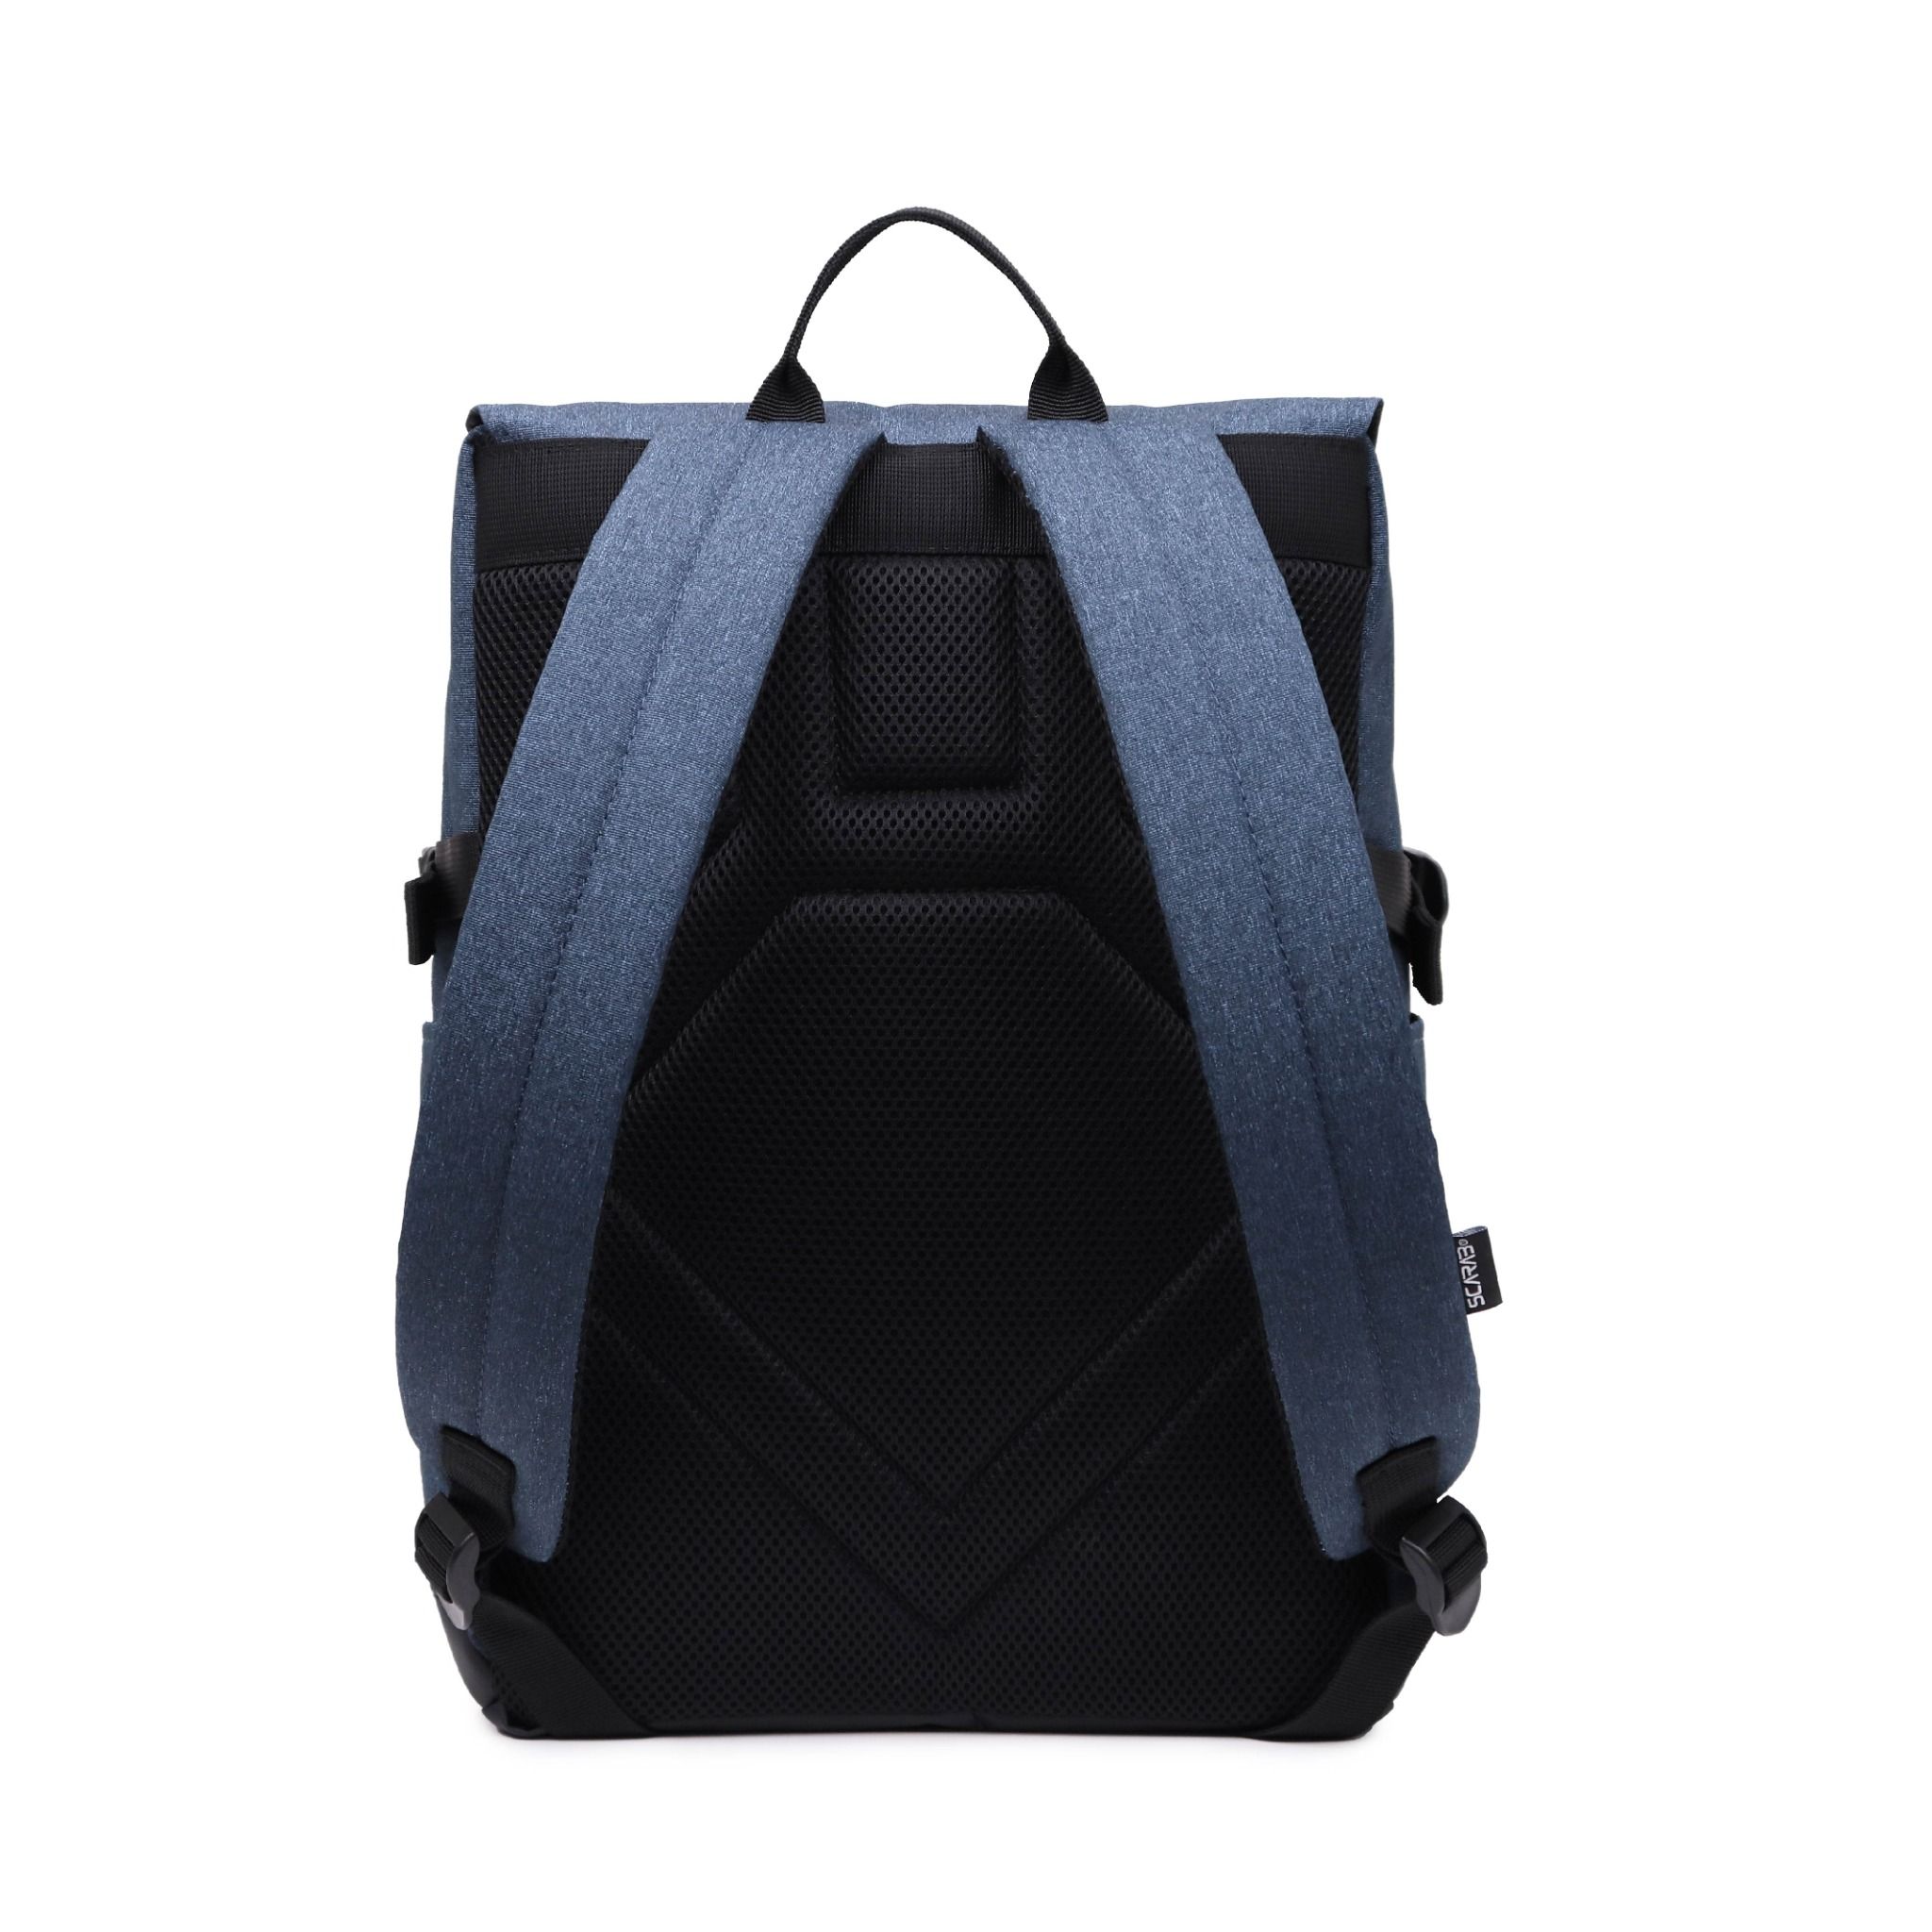  Urban Fabric Backpack - Navy 